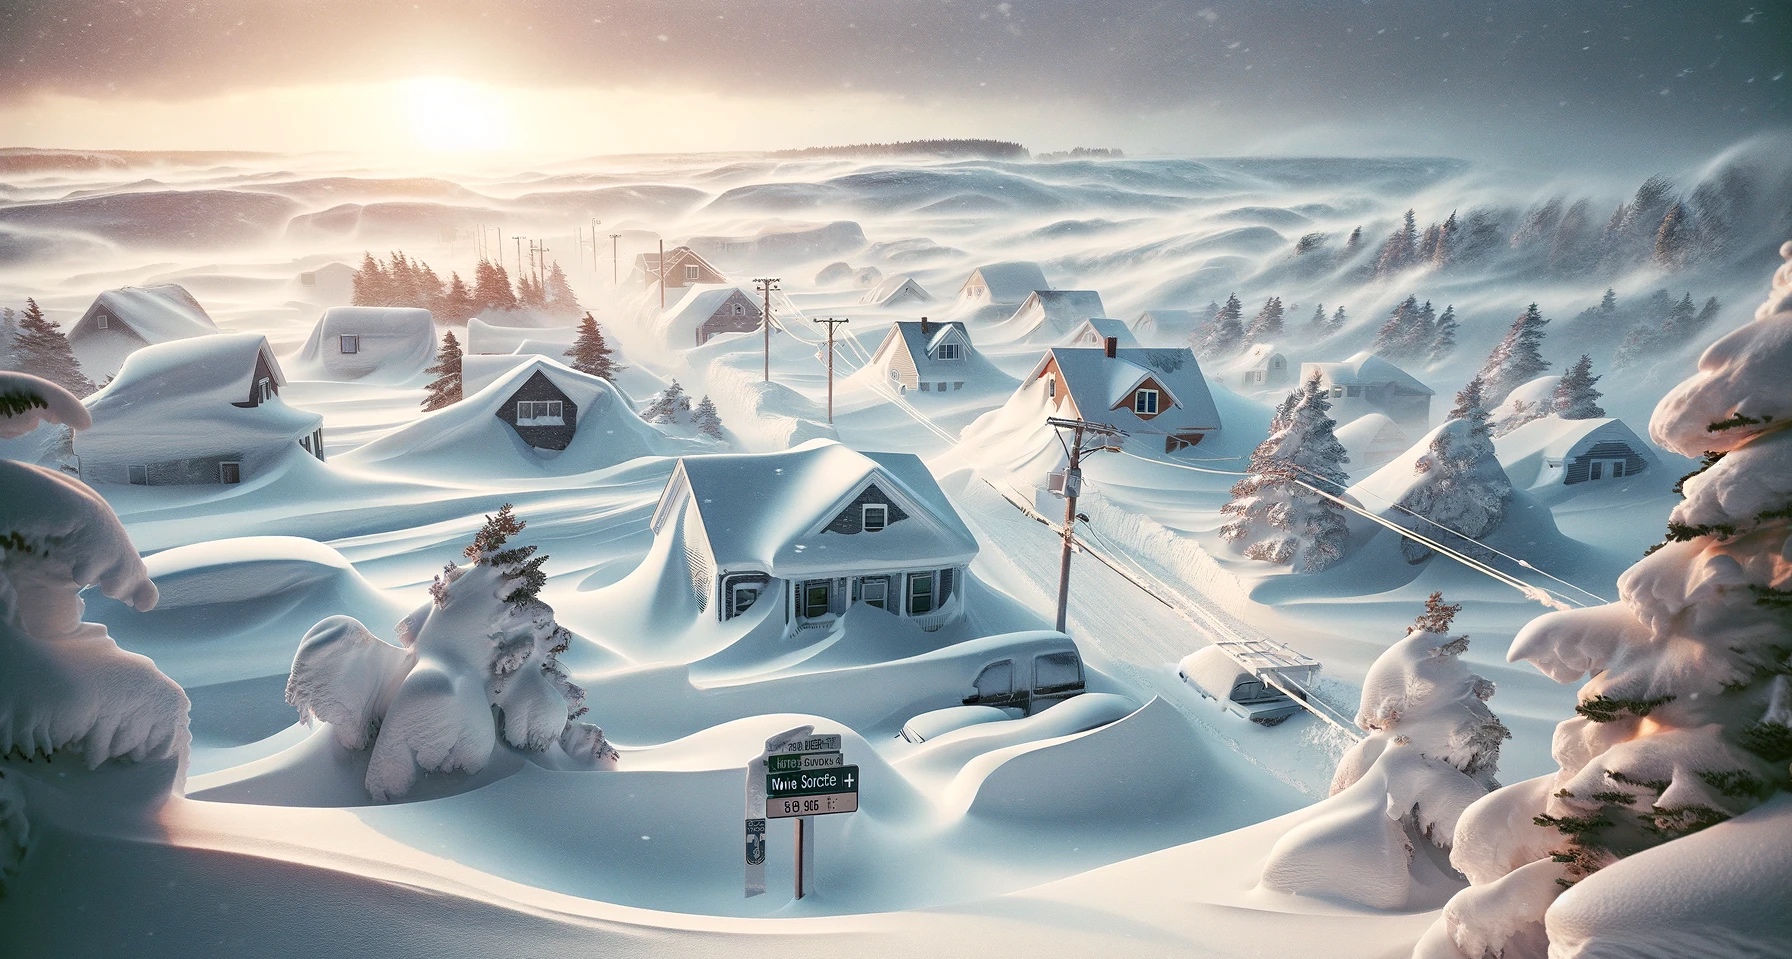 « Snowmageddon » au Canada. © XD pour Futura avec DALL-E